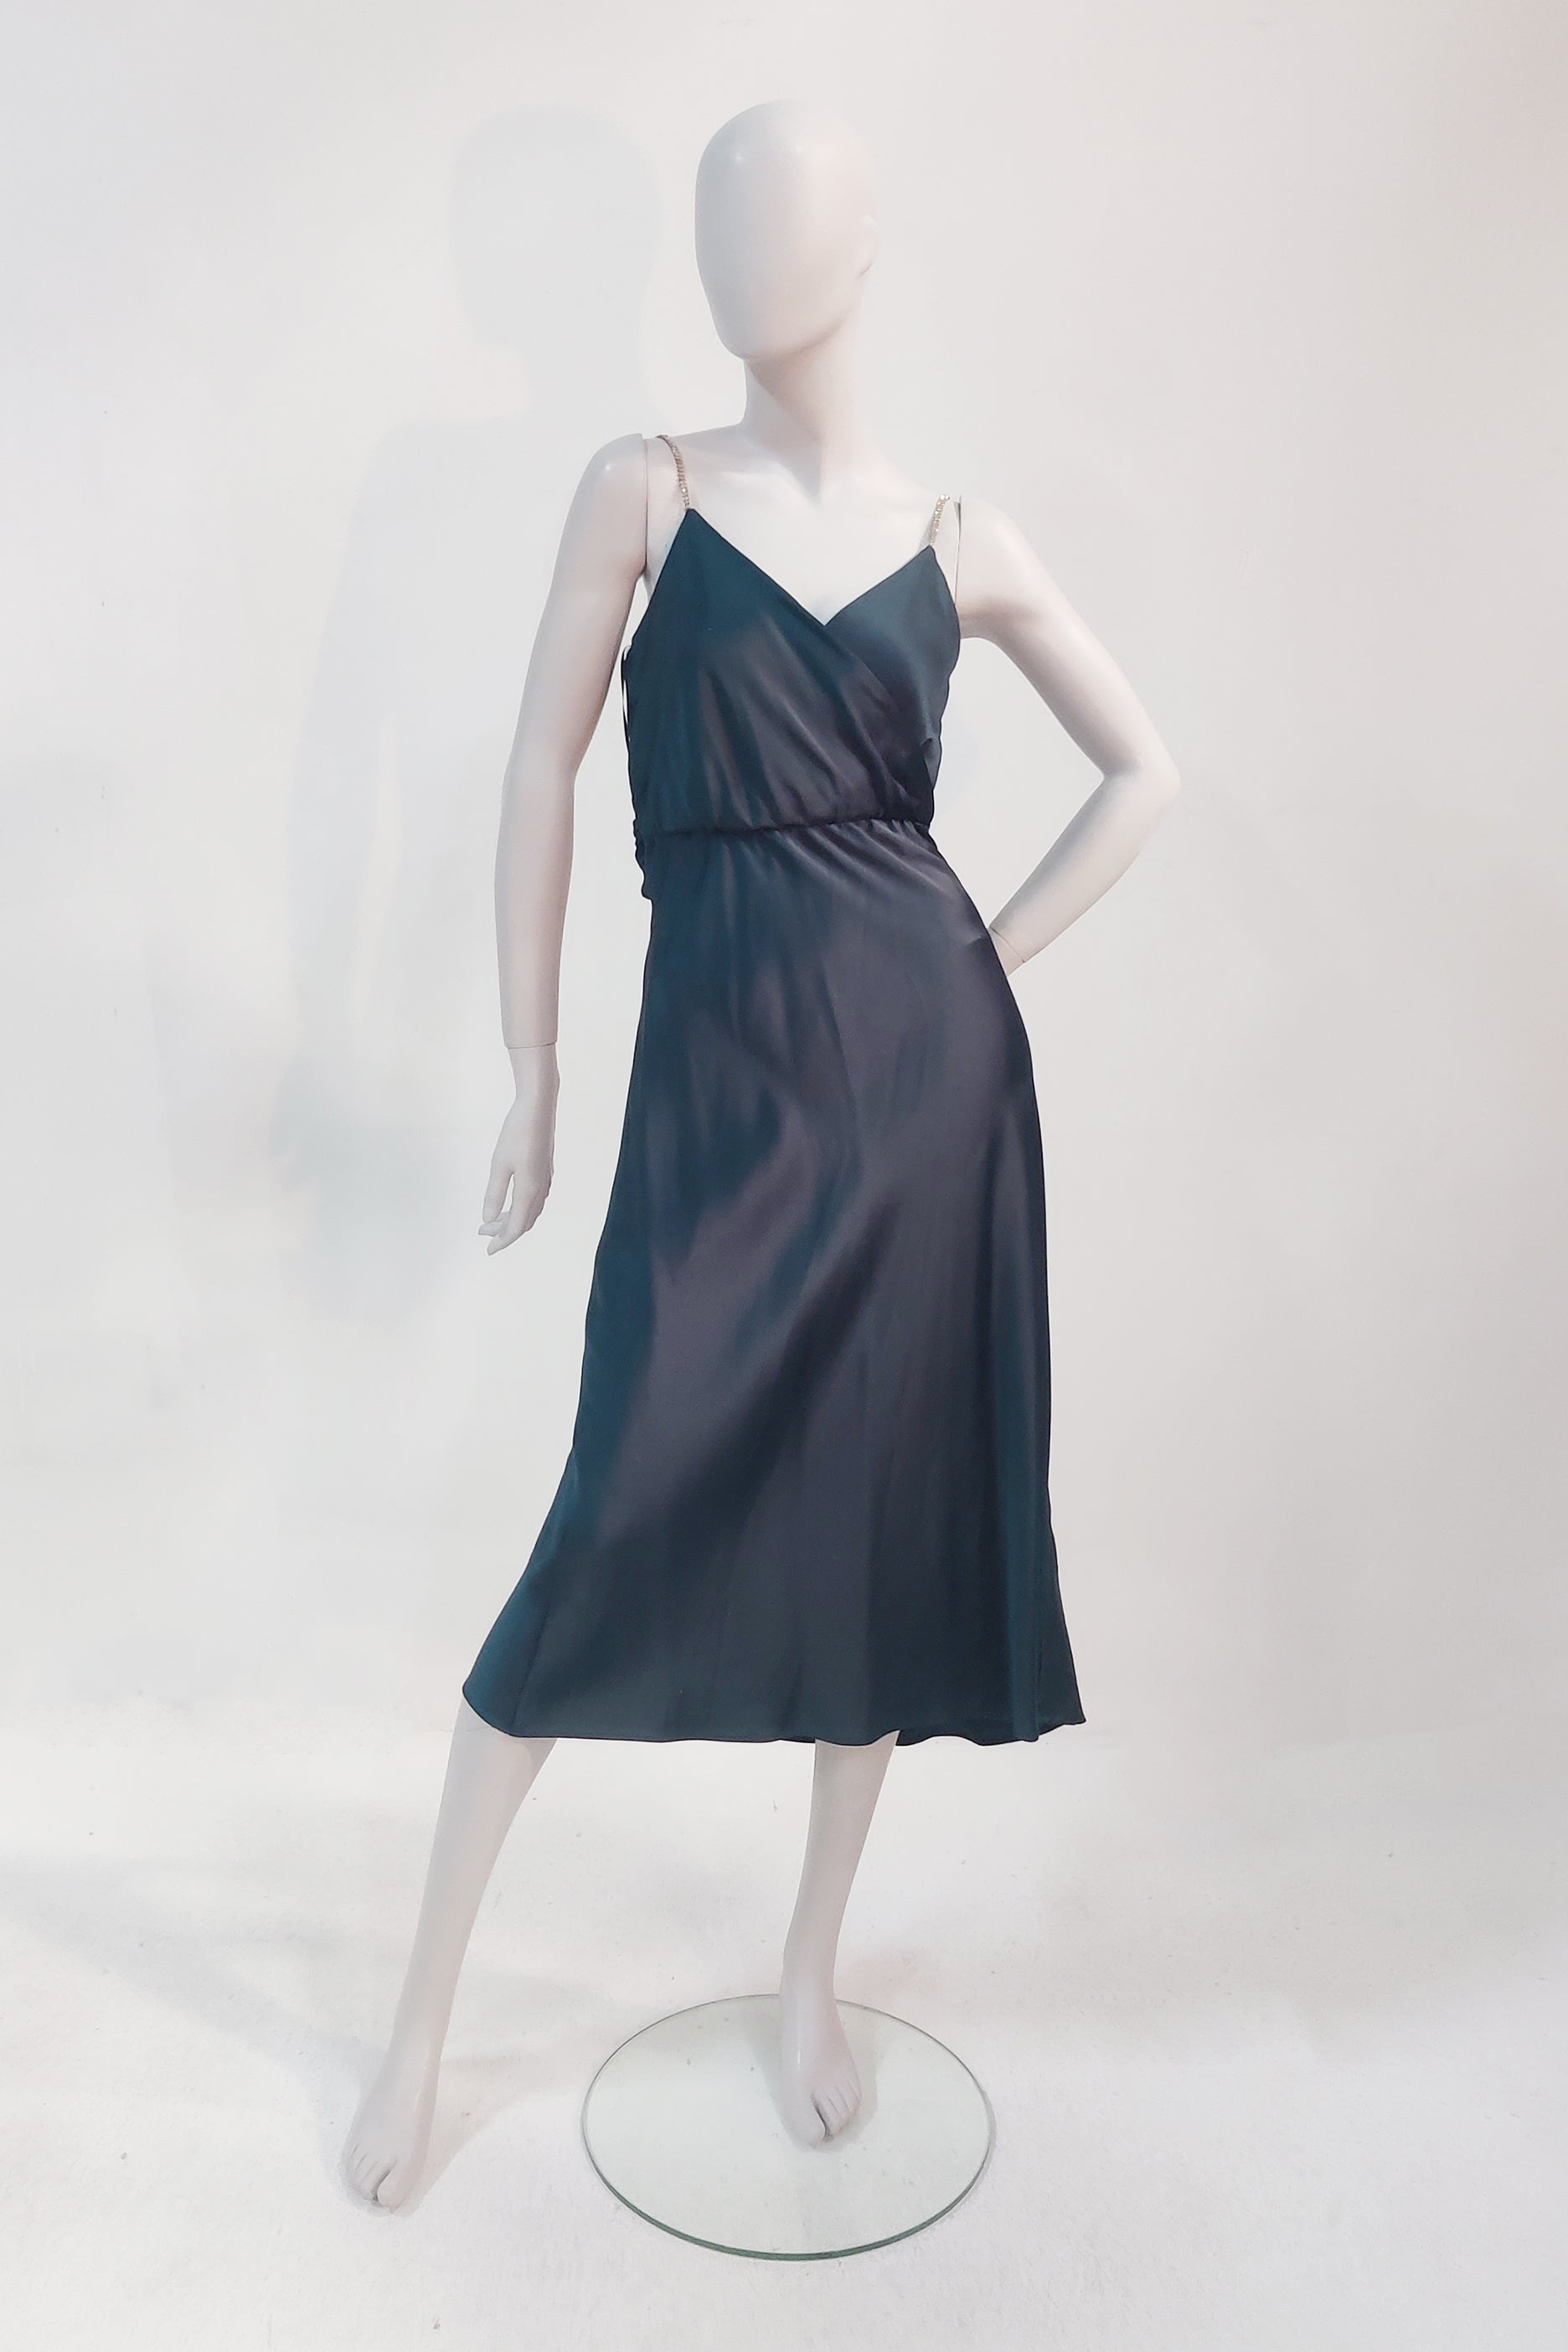 Teal Blue Satin Dress with Diamante Straps (Eu38)